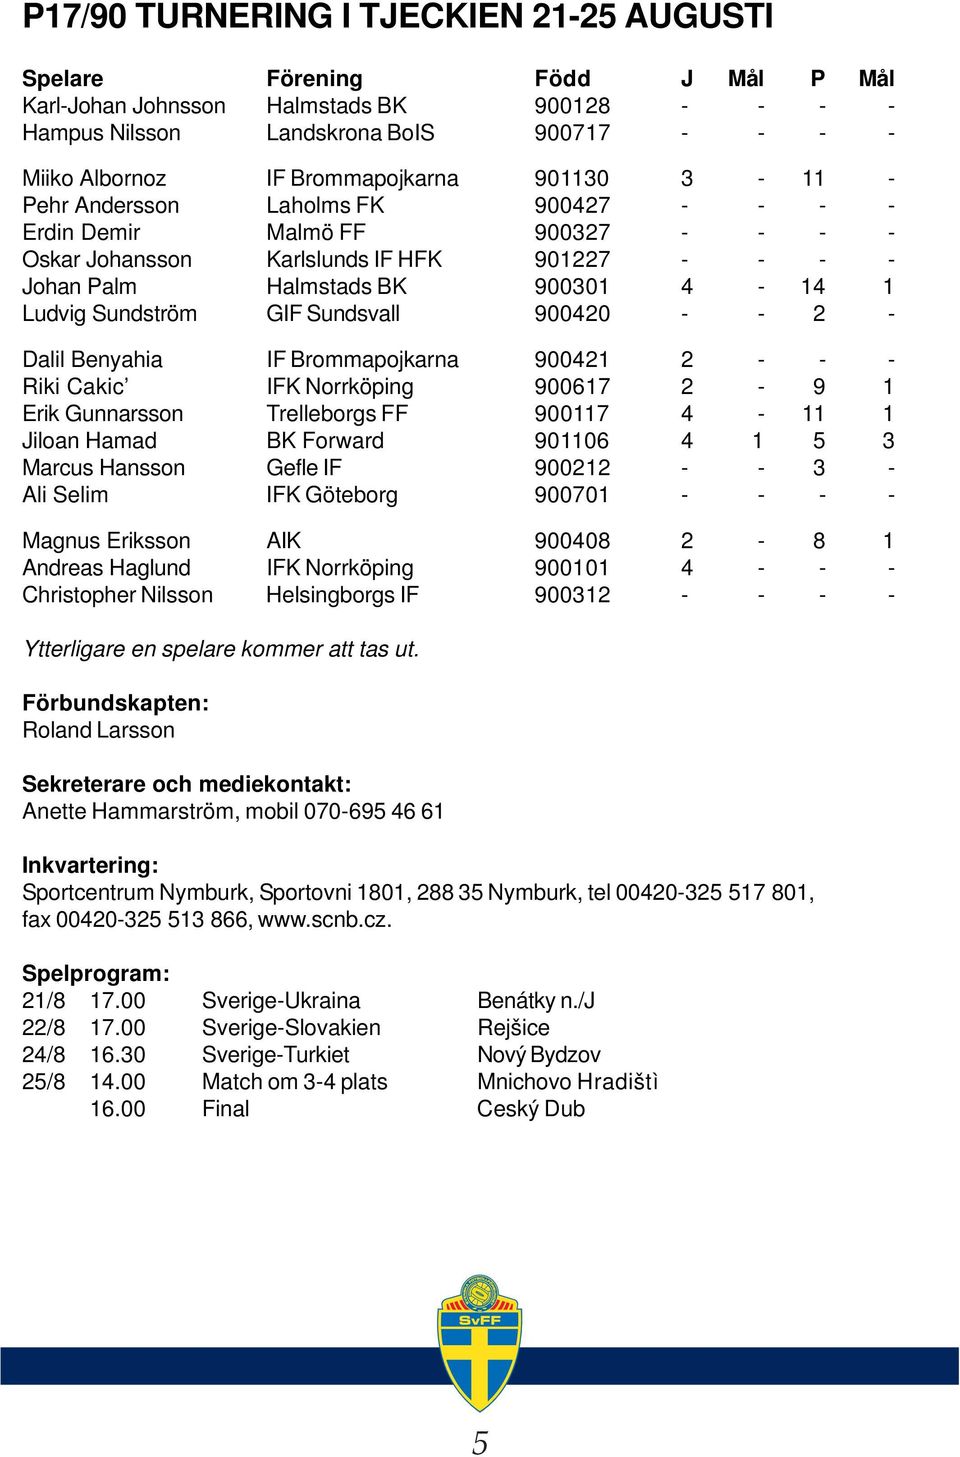 Sundström GIF Sundsvall 900420 - - 2 - Dalil Benyahia IF Brommapojkarna 900421 2 - - - Riki Cakic IFK Norrköping 900617 2-9 1 Erik Gunnarsson Trelleborgs FF 900117 4-11 1 Jiloan Hamad BK Forward